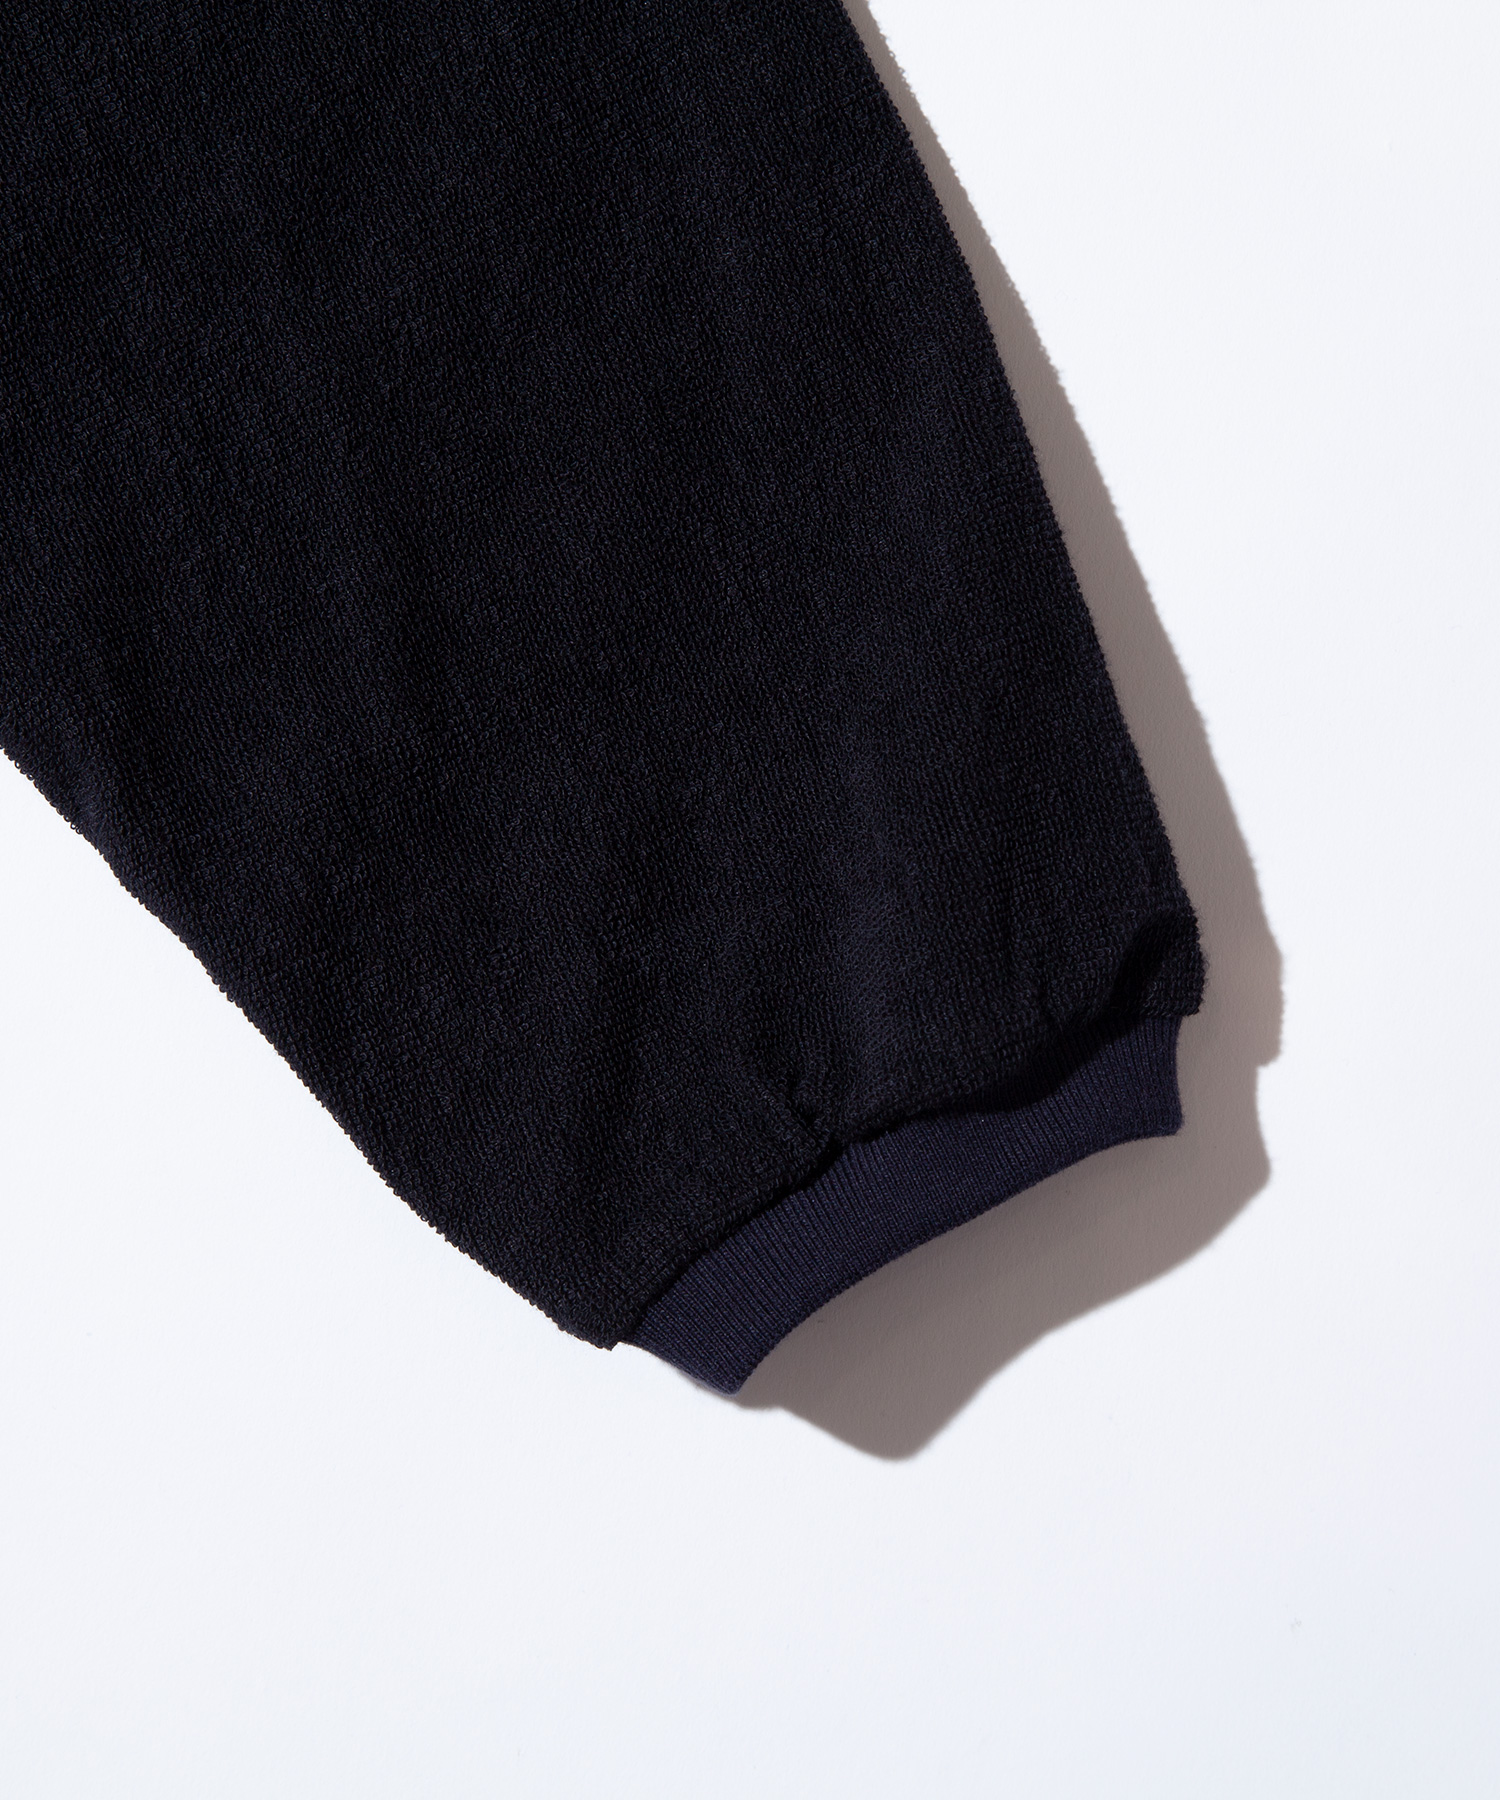 Thing Fabrics Long sleeve T-shirt (1mm Pile) / シングファブリック